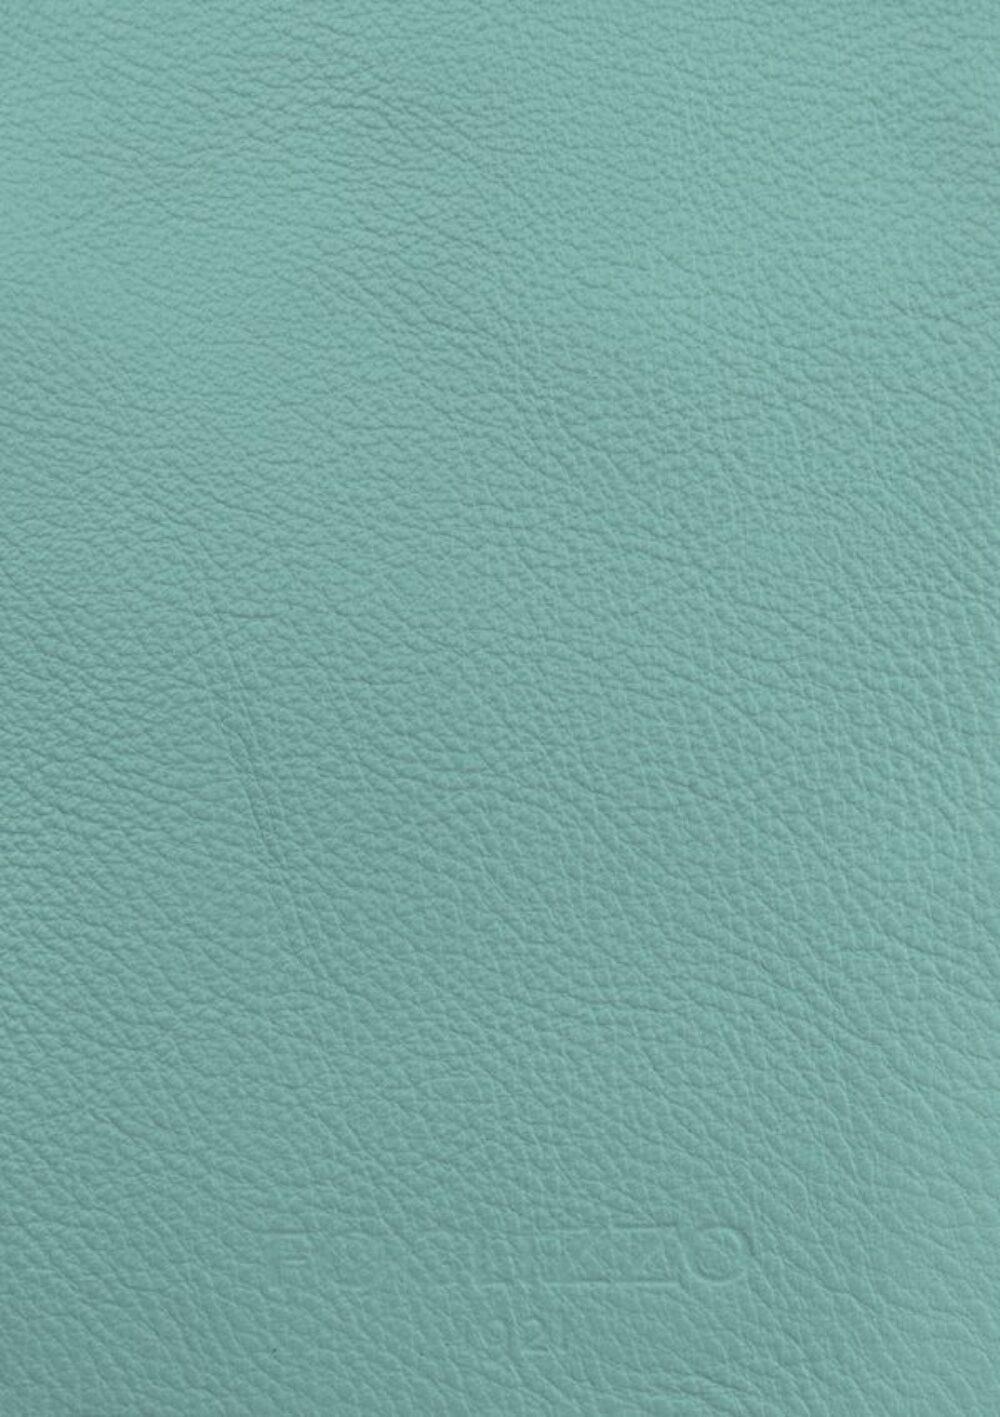 奢华地毯的境界 • Marine Blue Green Jade